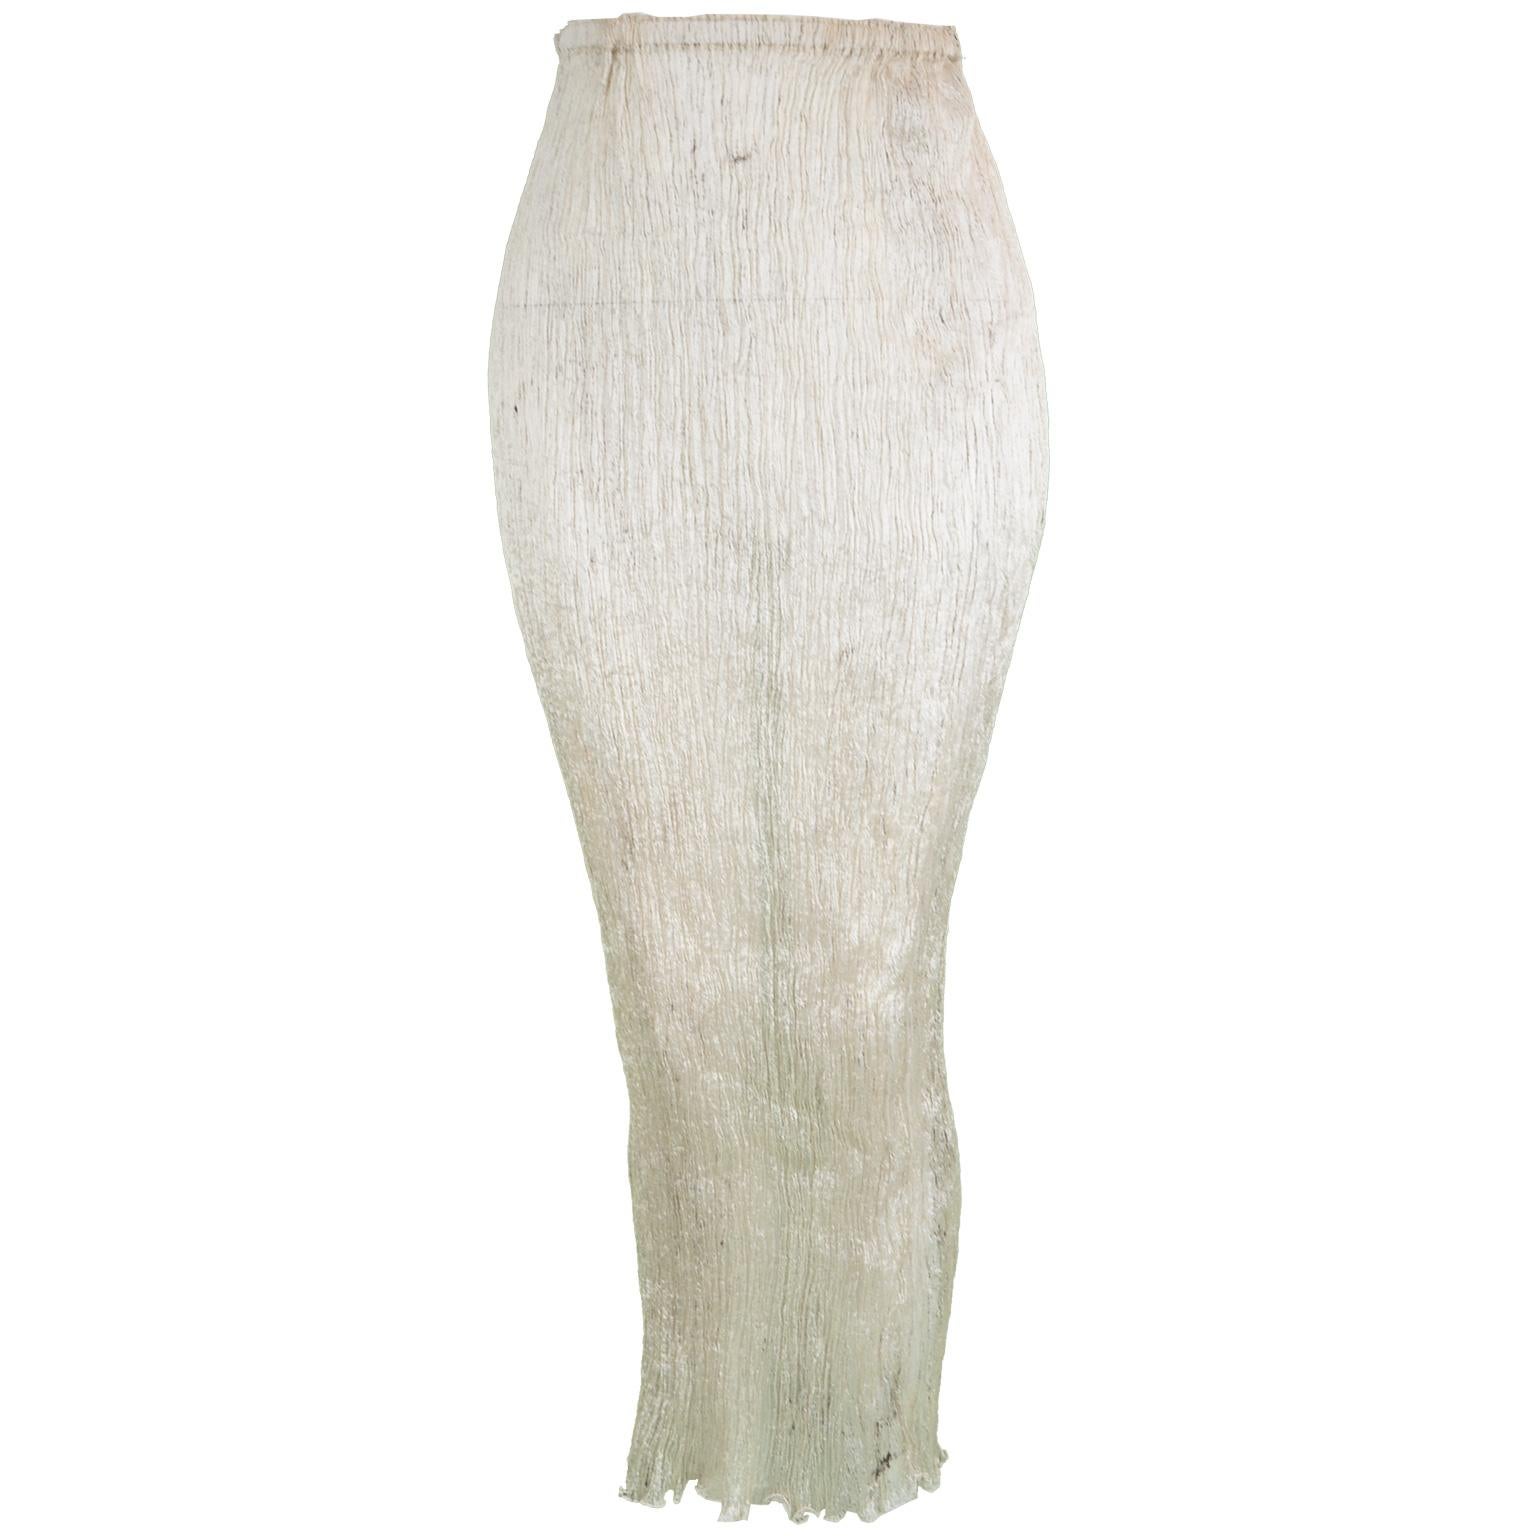 Zandra Rhodes Vintage Fortuny Pleated Organza Artisanal Maxi Skirt / Dress